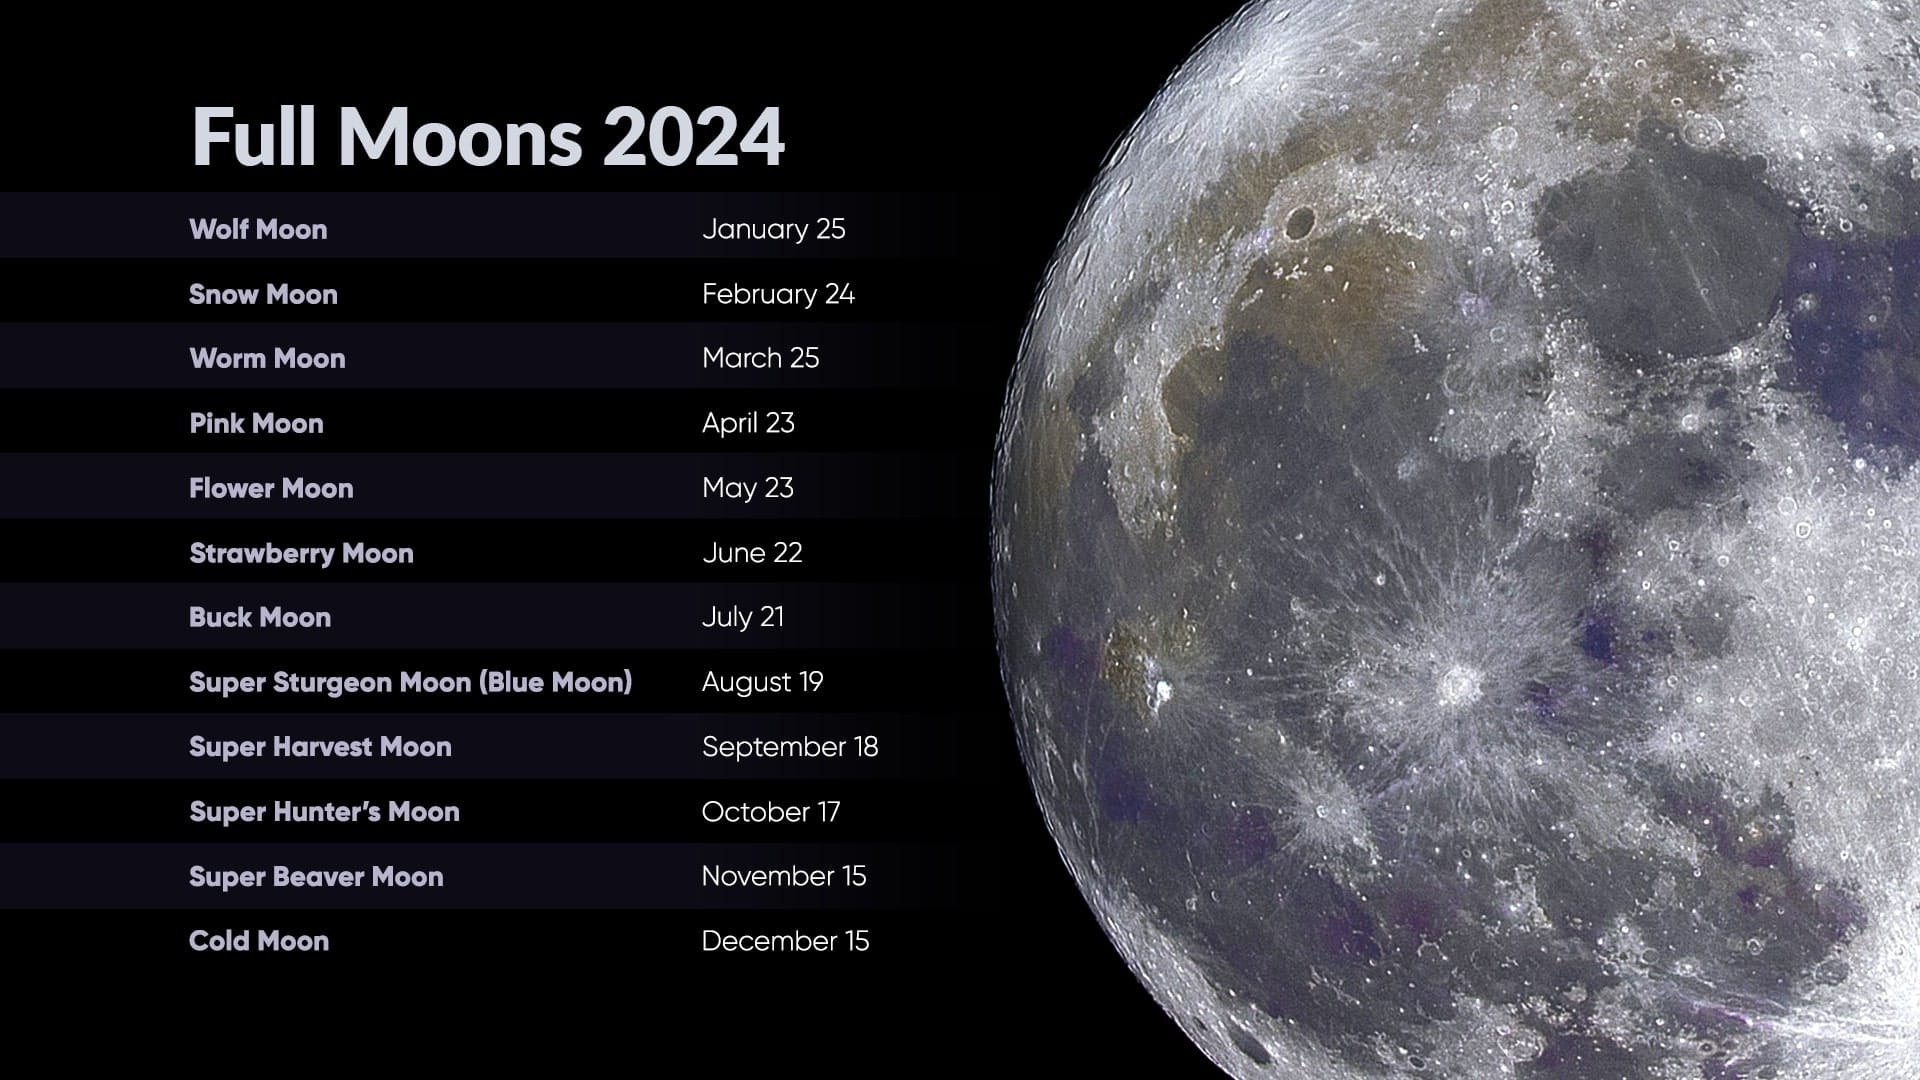 Next Full Moon | February Full Moon 2024 | Full Moon Schedule 2024 in July 24 Lunar Calendar 2024